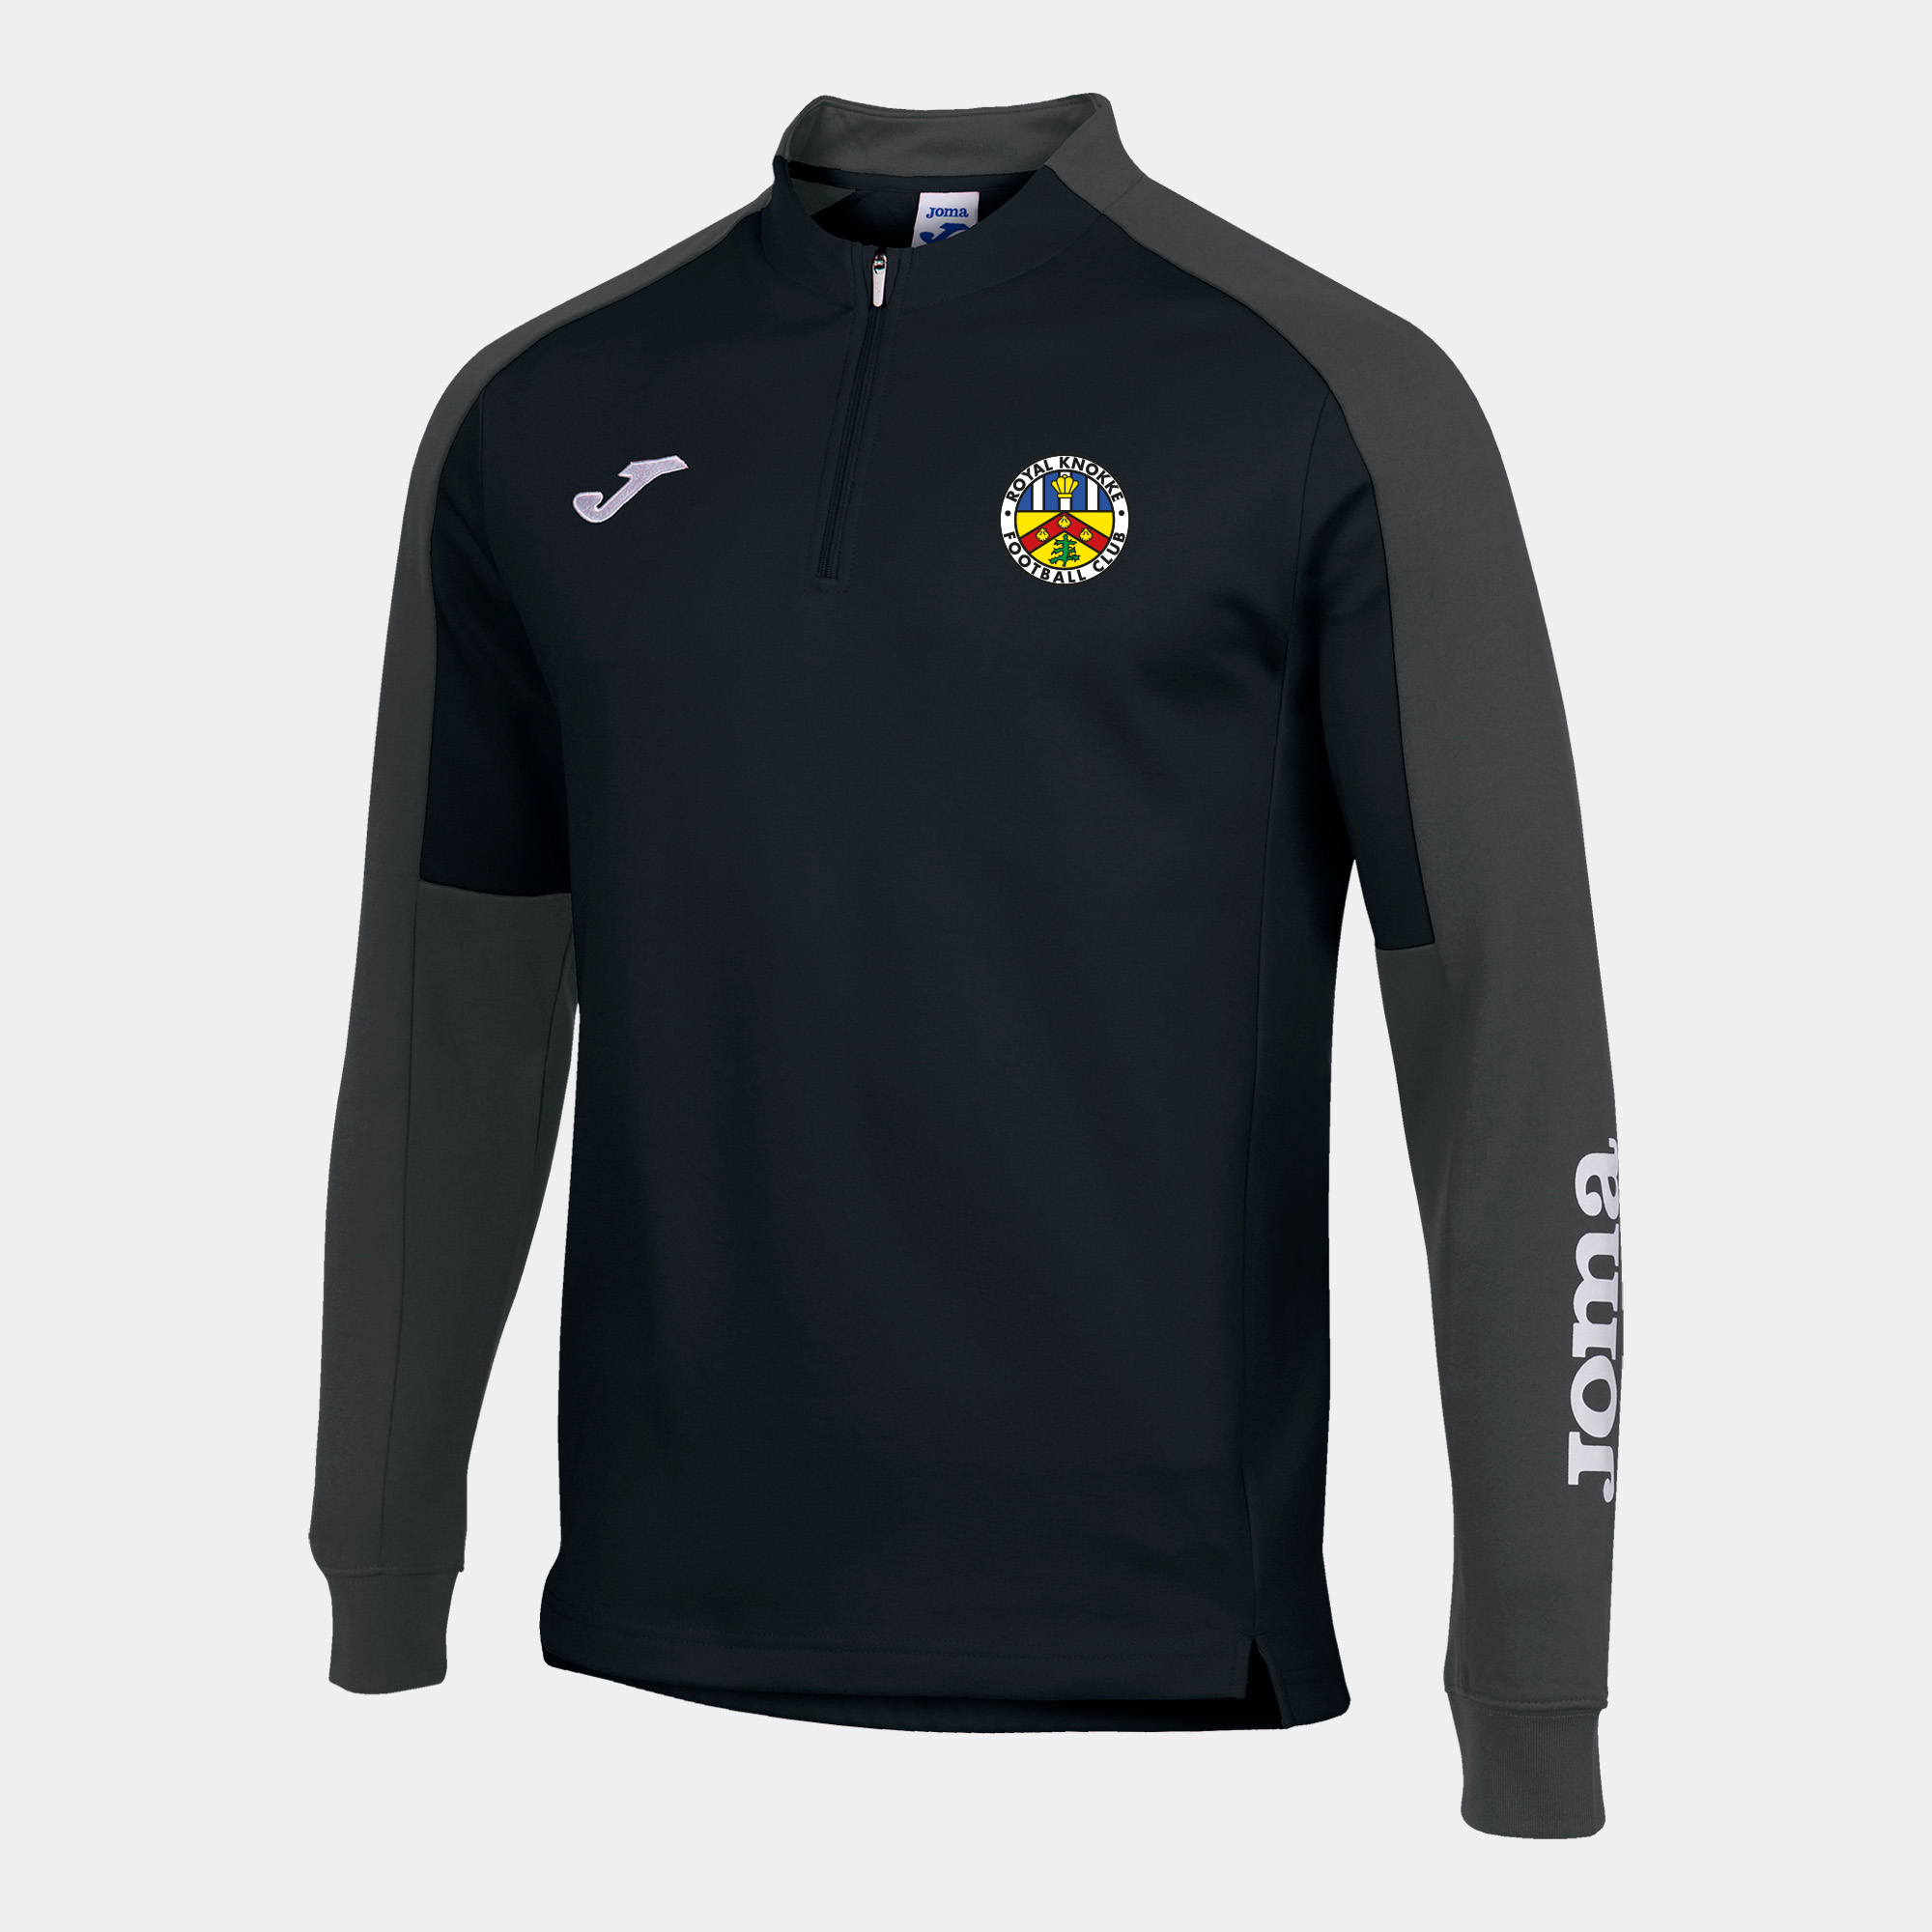 Royal Knokke FC - Sweatshirt man Eco Championship black dark gray 